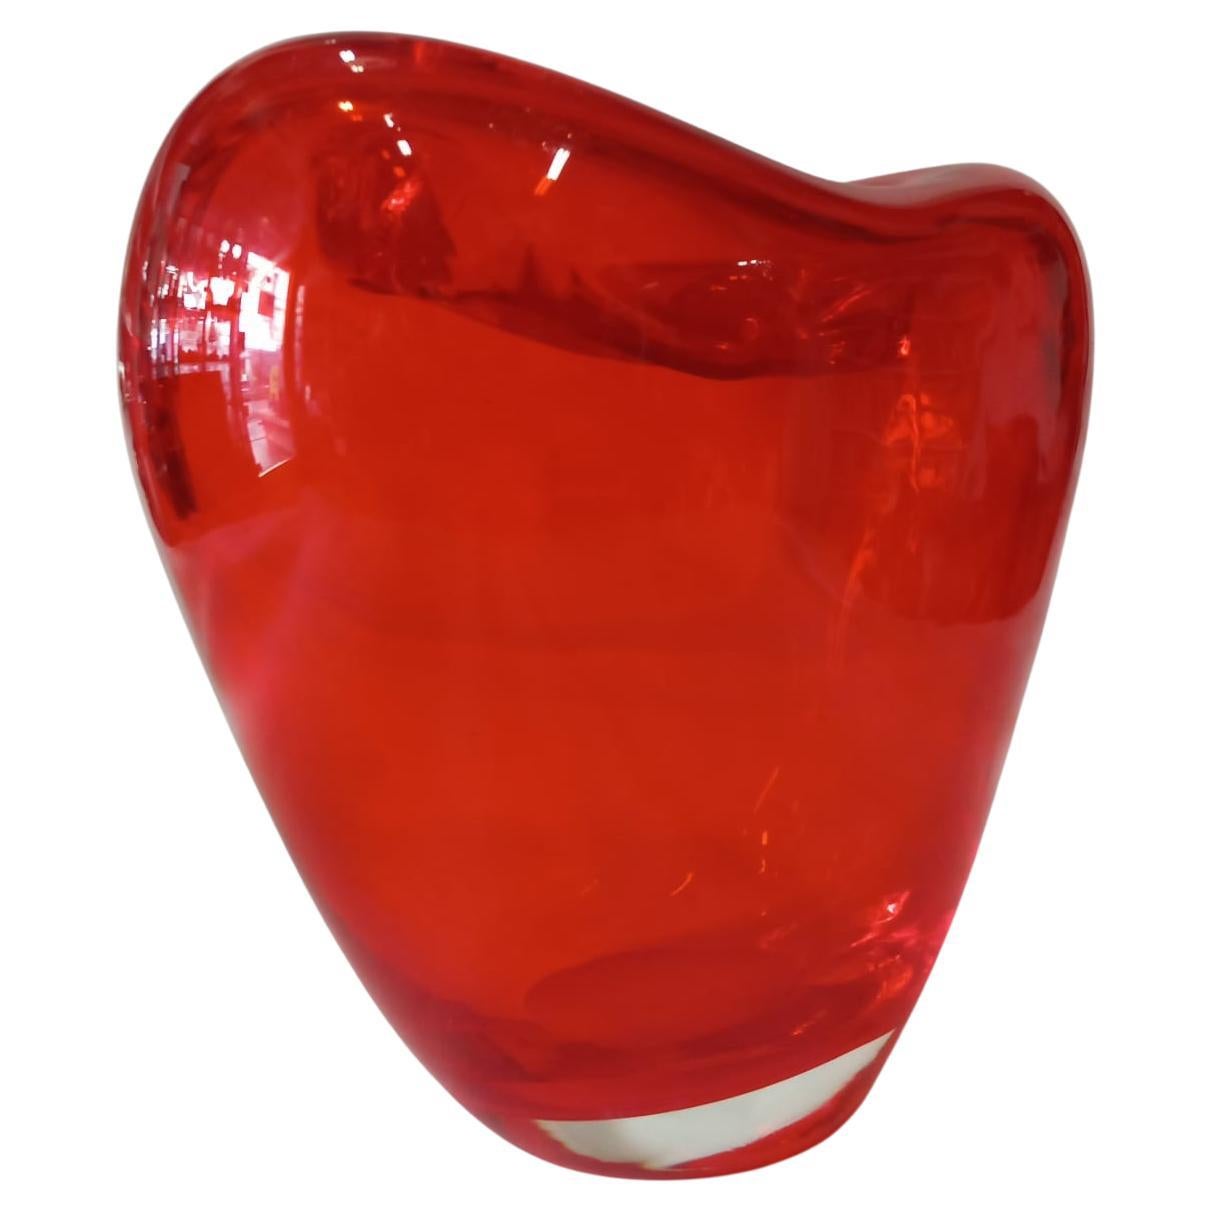 Murano glass heart vase by Maria Christina Hamel, 1990s, good original condition.